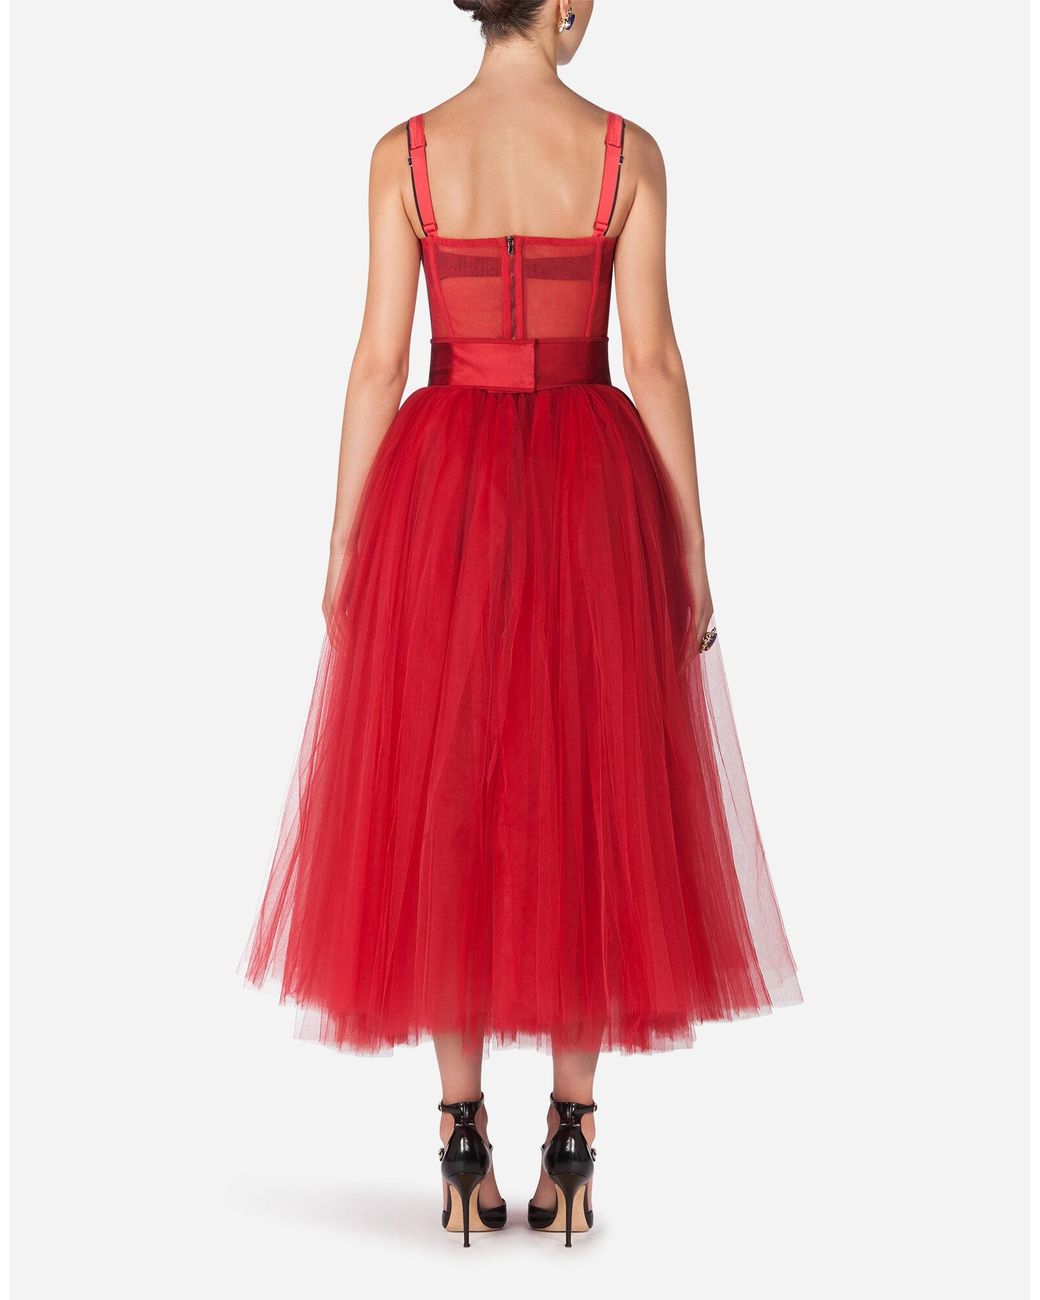 Mini Red Tulle Dress, Tulle Dress, Red Corset Tulle Dress, Tutu